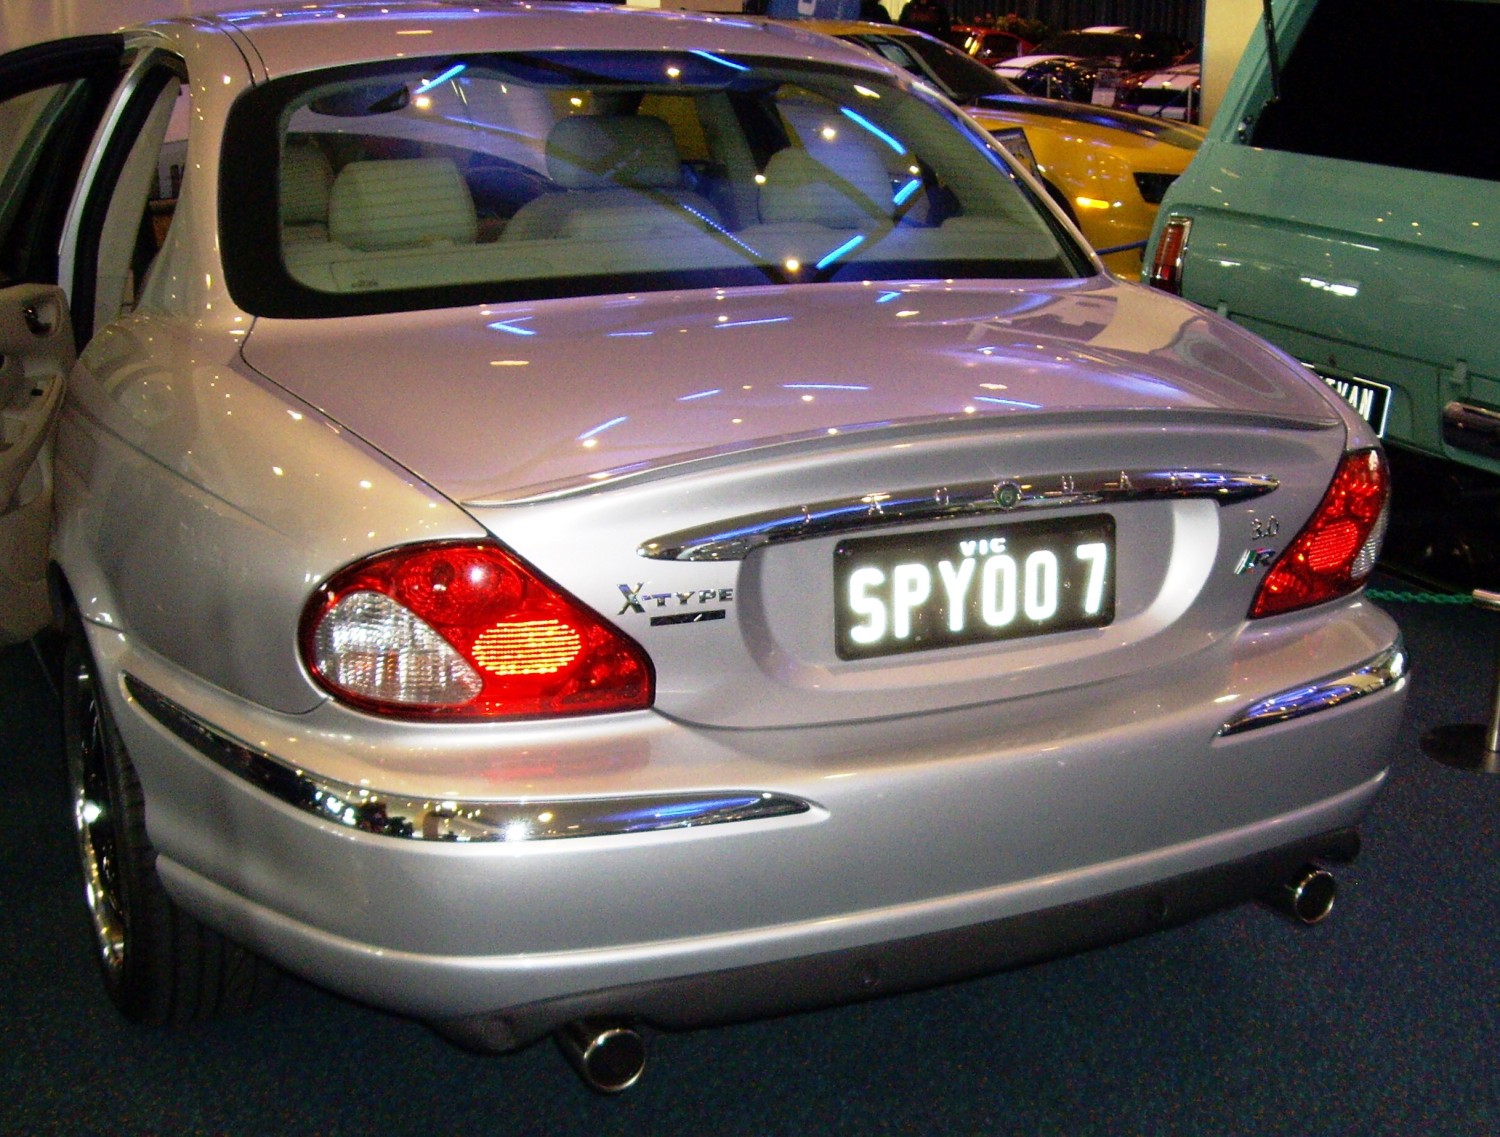 2001 Jaguar X Type R - SPY007 - Shannons Club